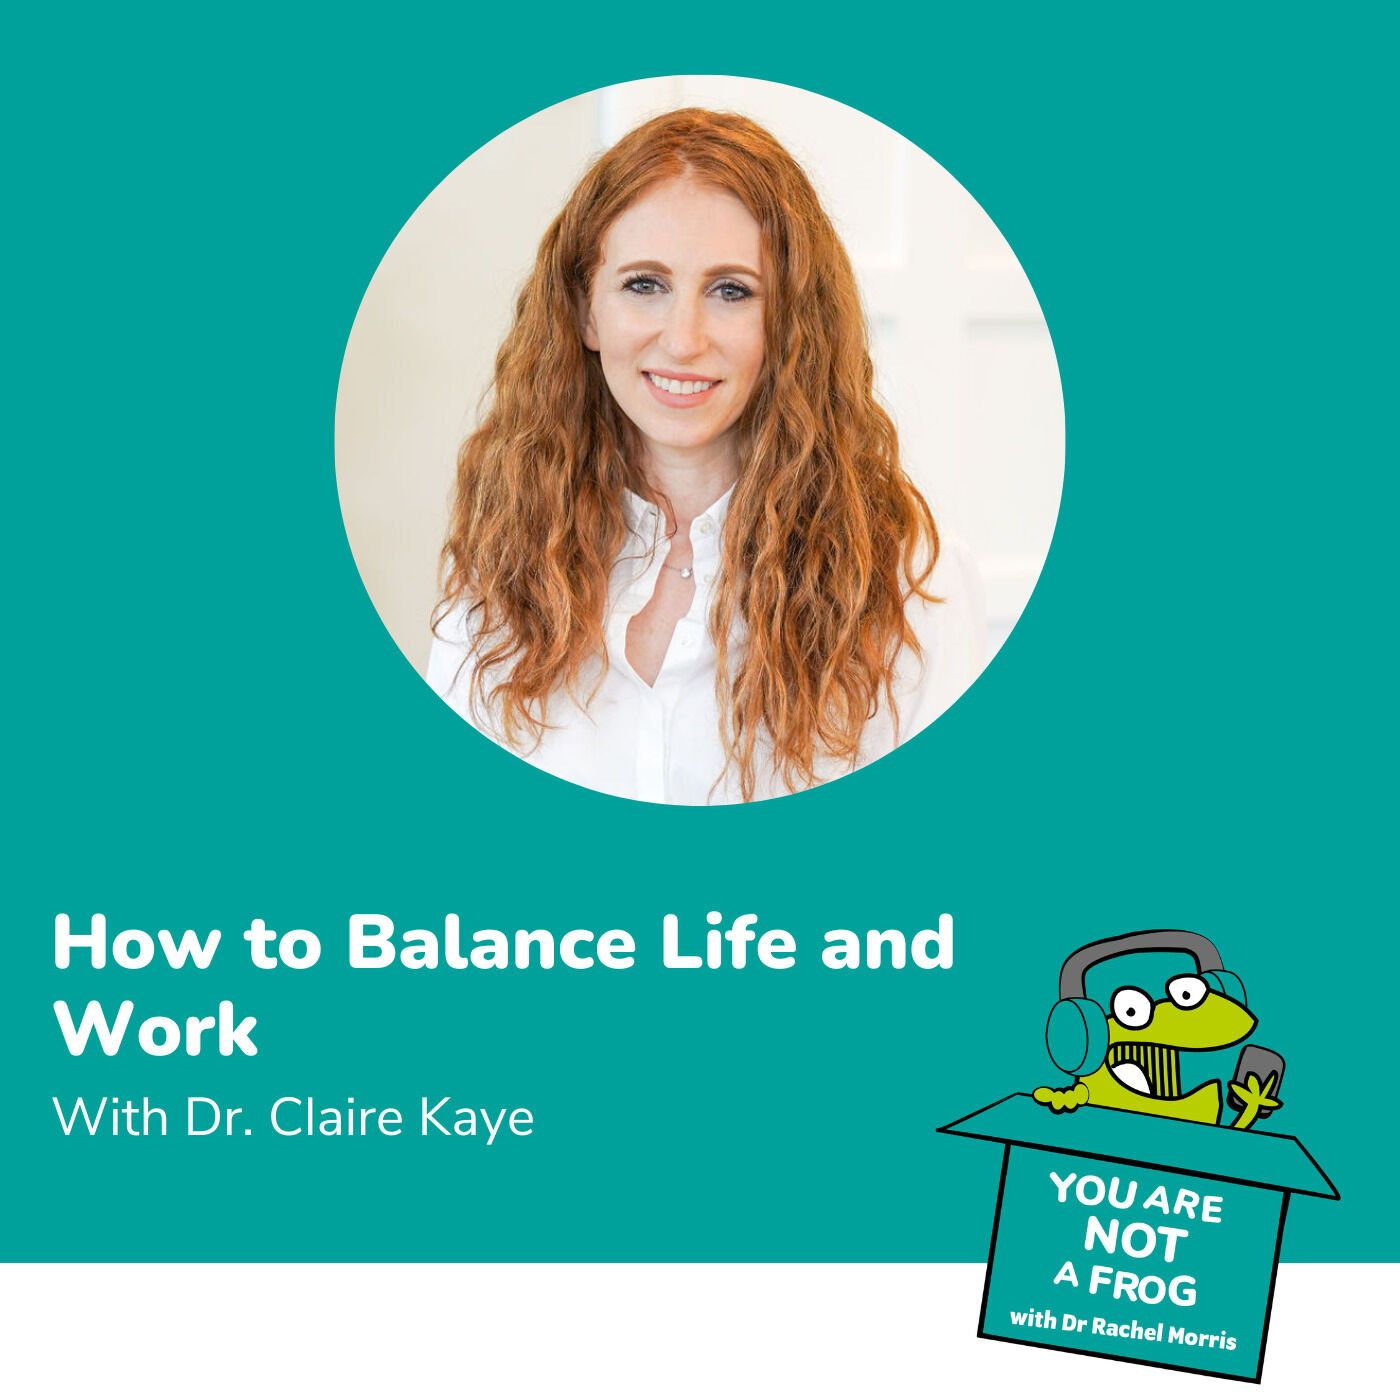 How to Balance Life and Work